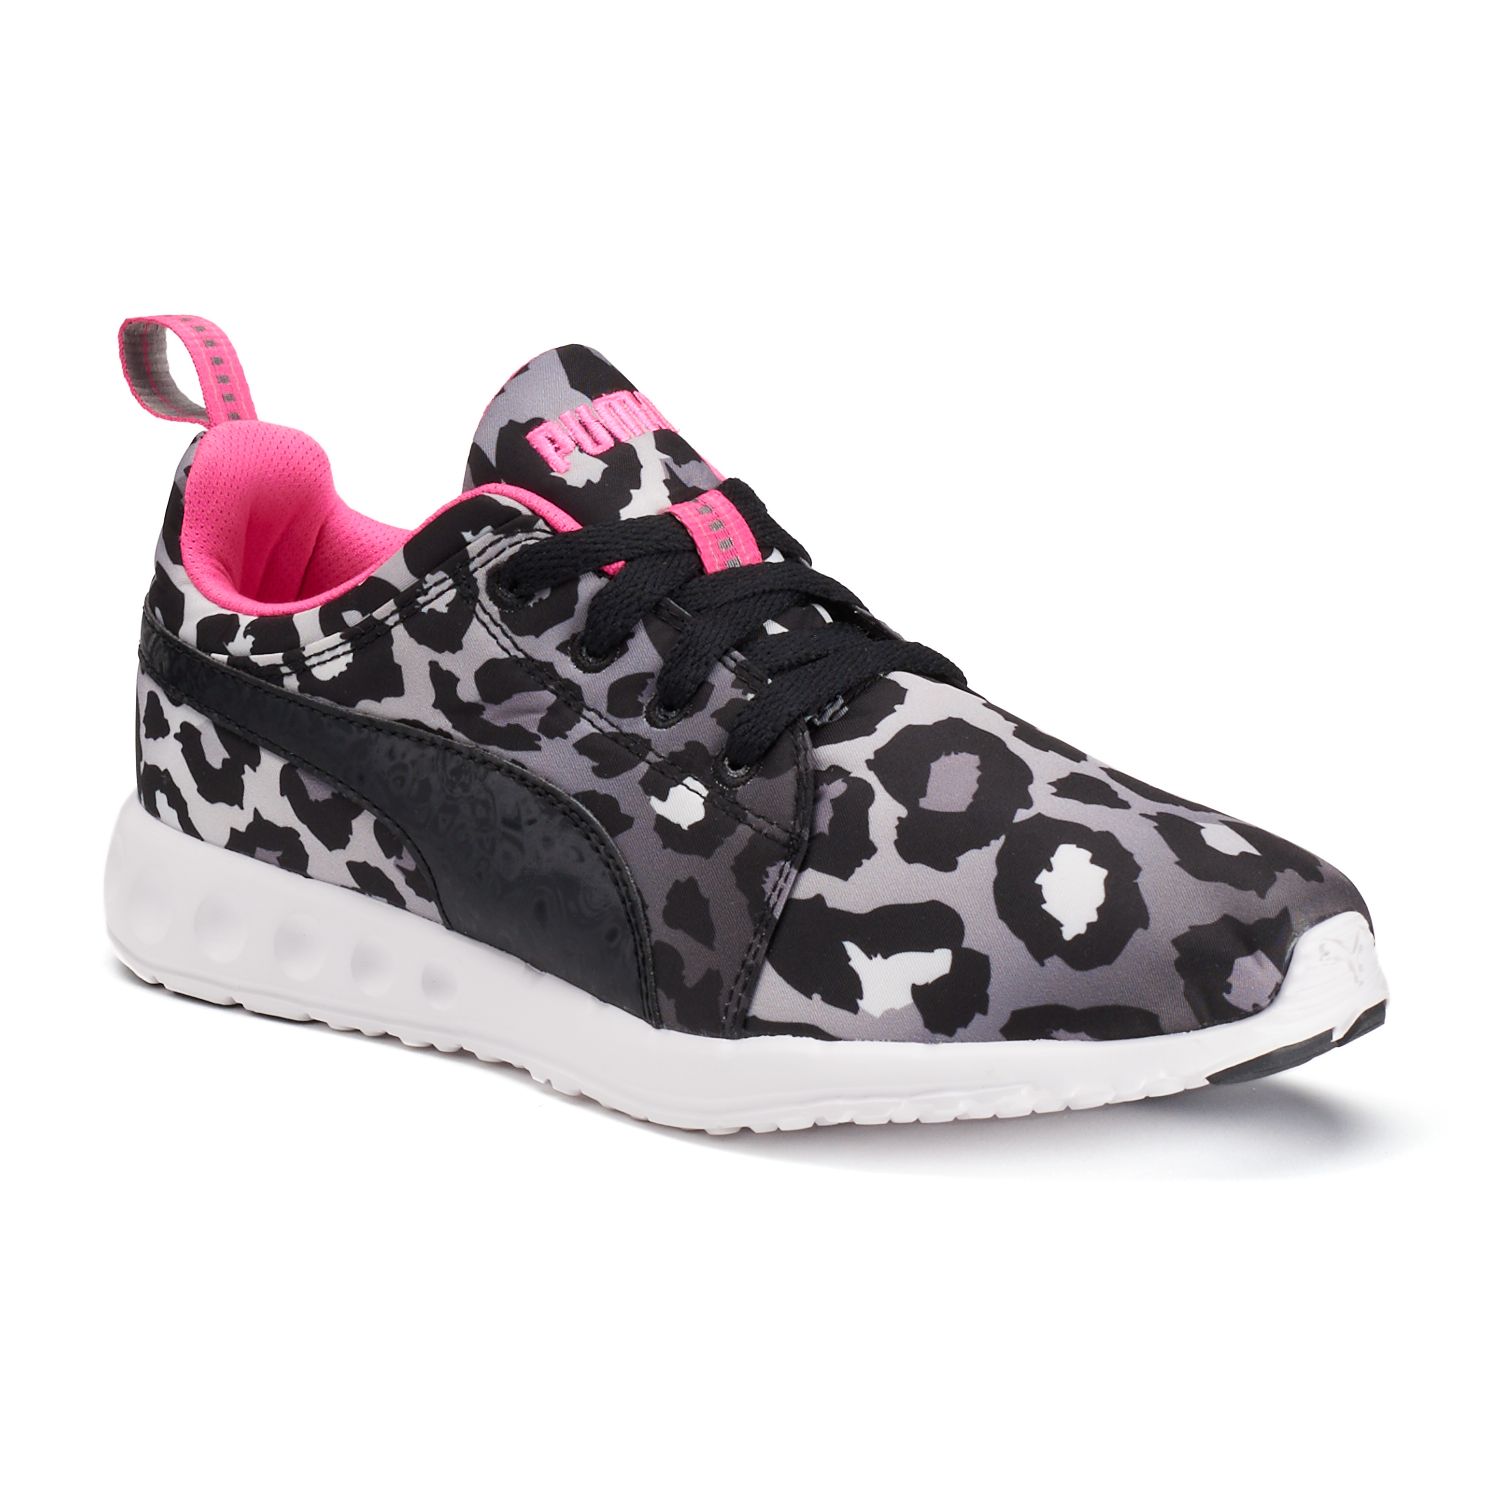 puma leopard print shoes